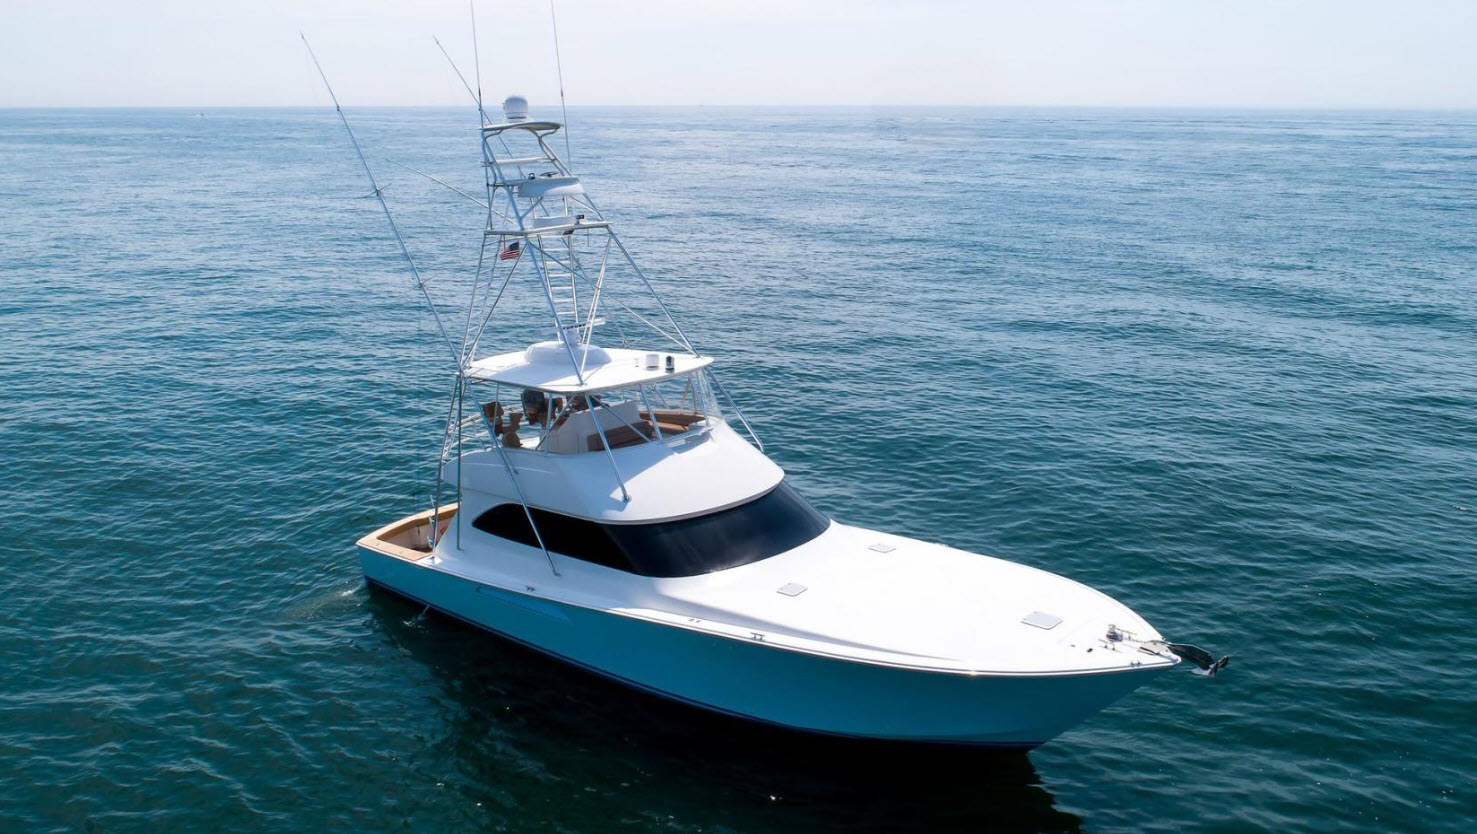 60-foot sport fishing boat over 2 million